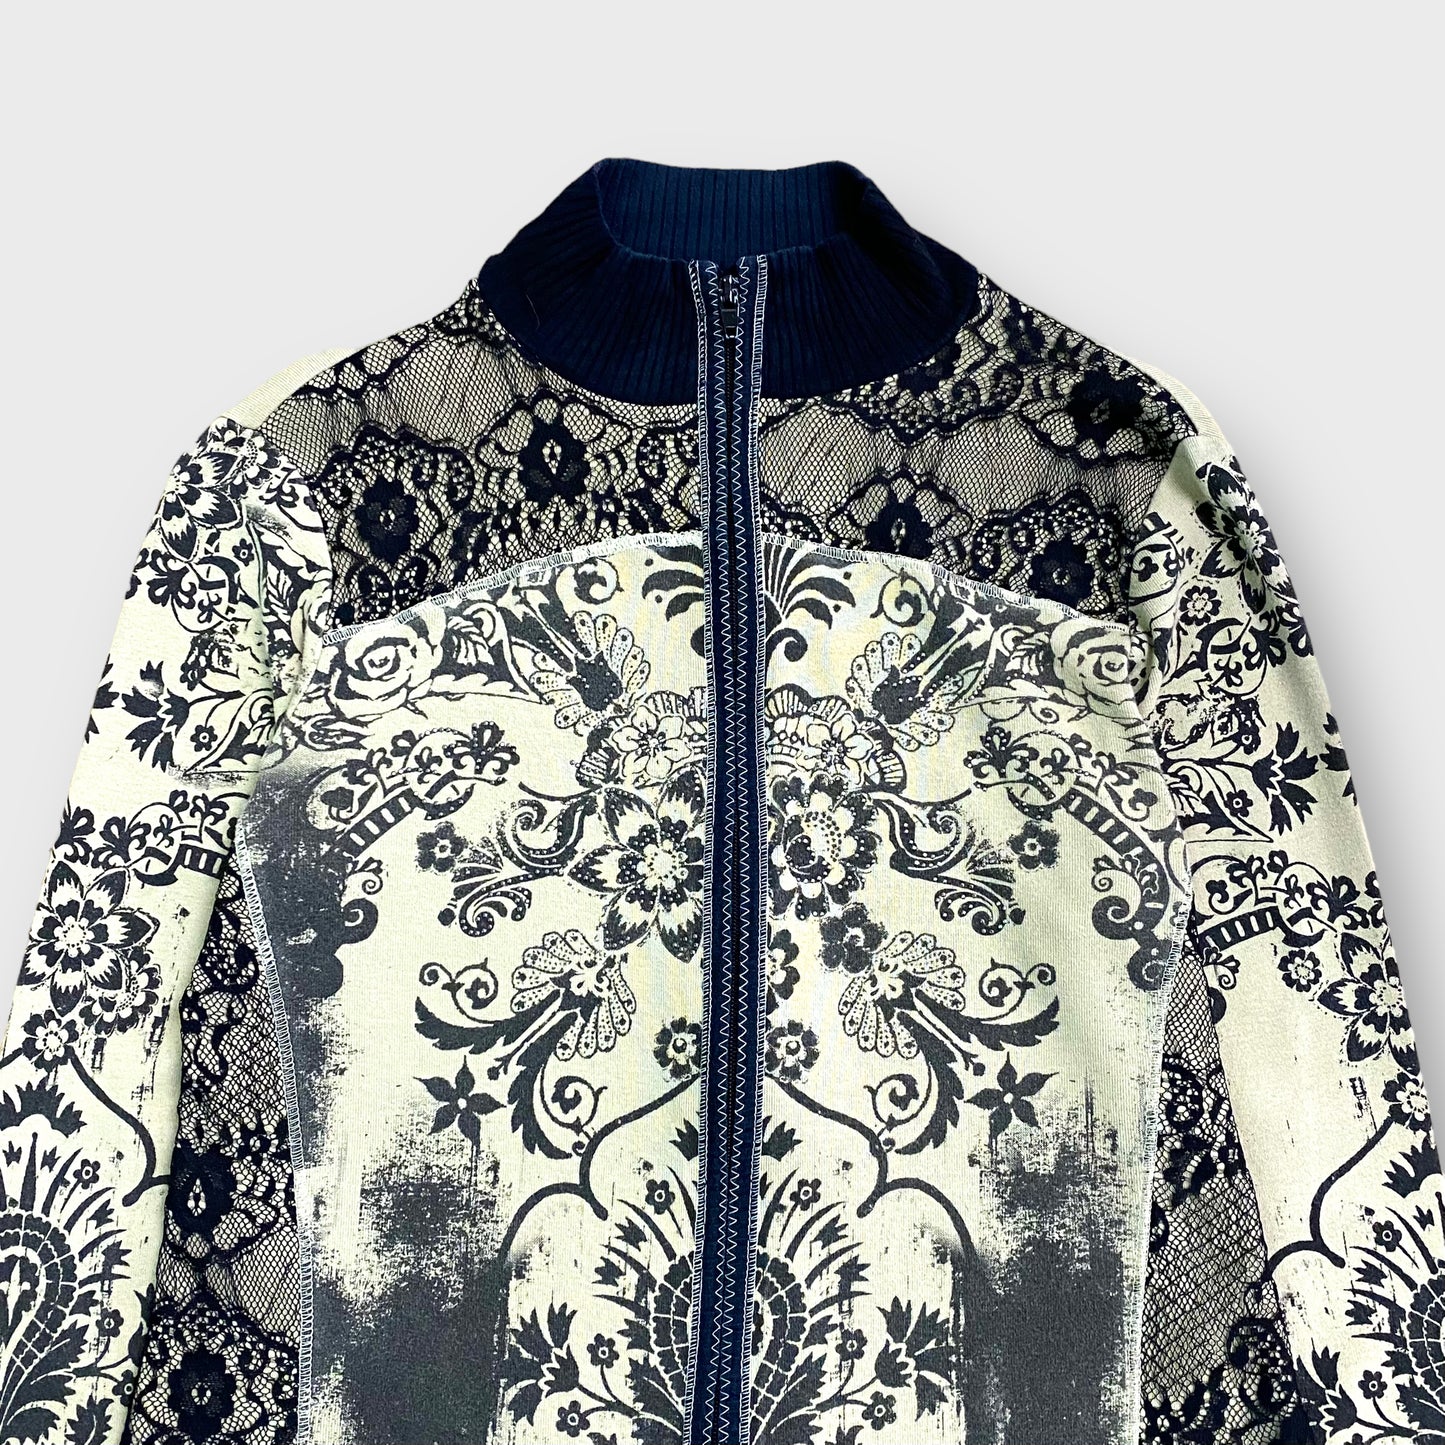 Flower pattern cotton track jacket